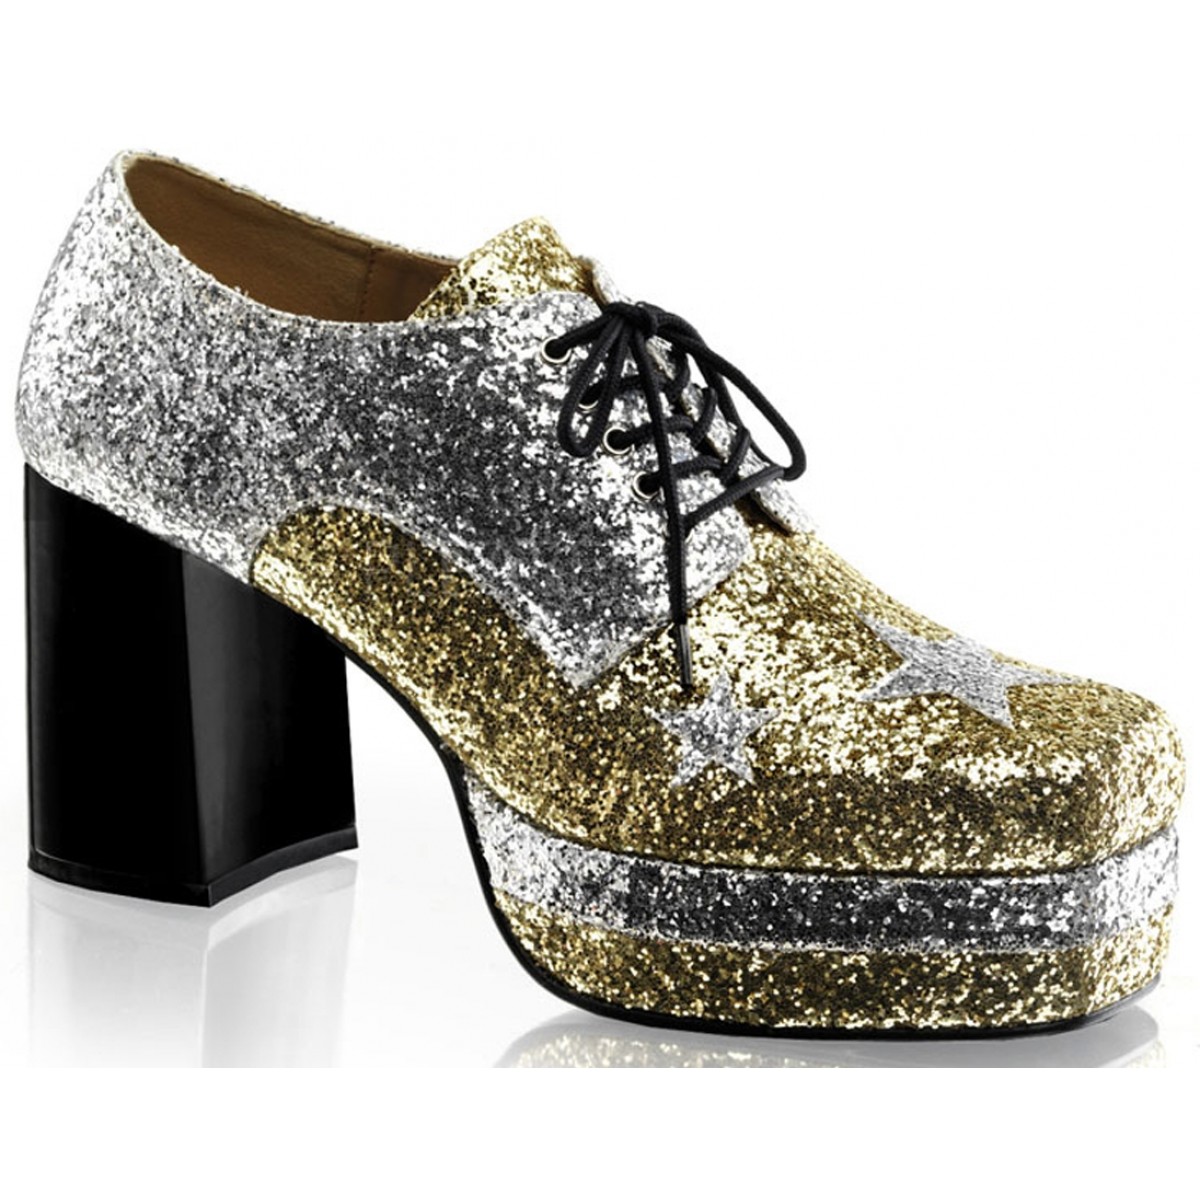 Glamrock 1970s Platform Shoes in Gold and Silver for Men